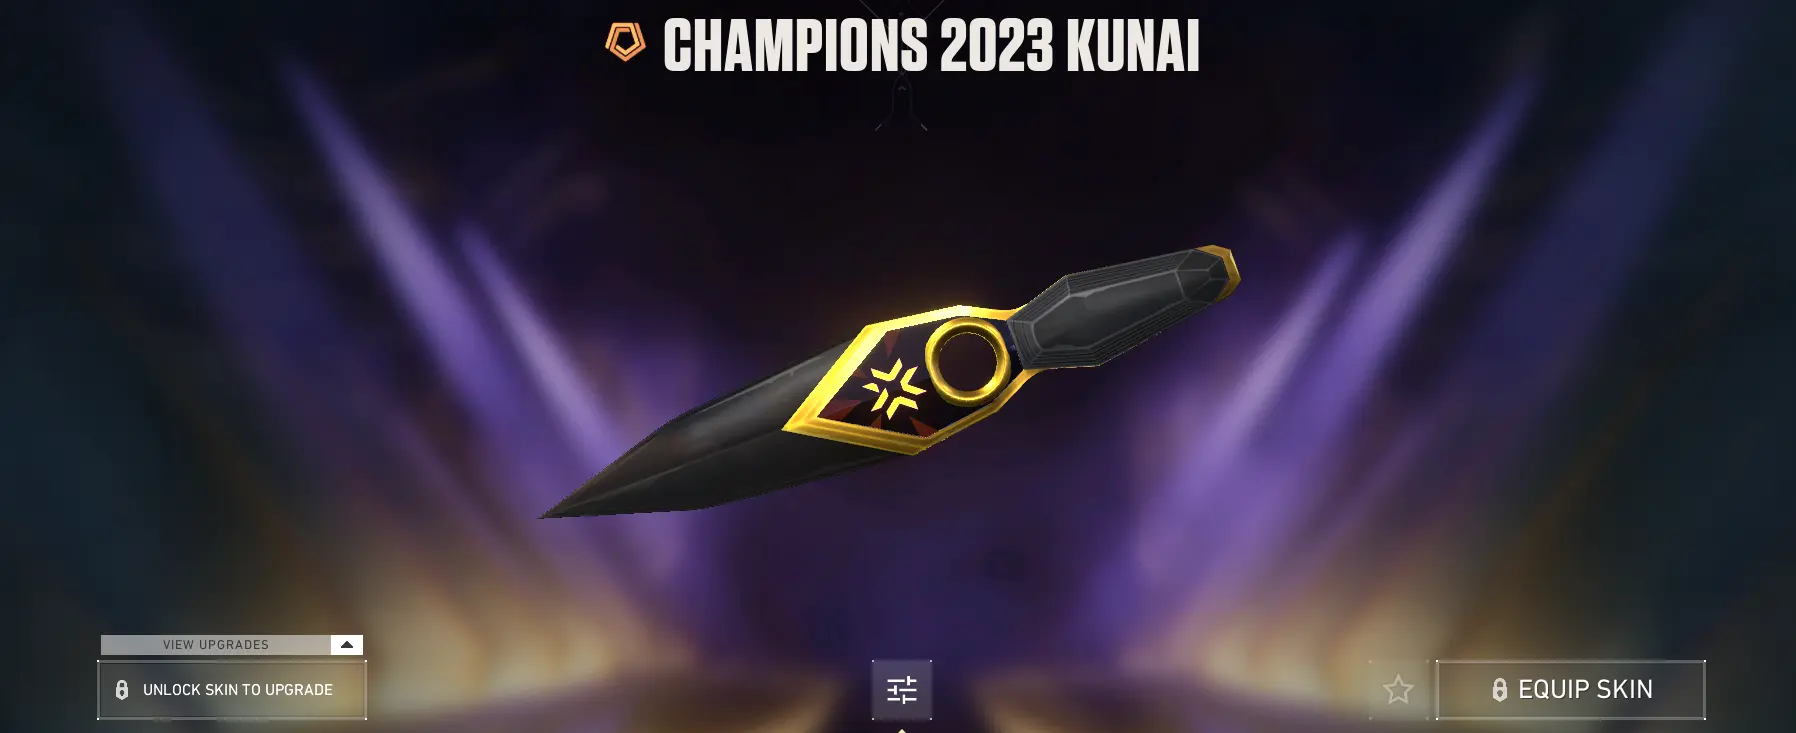 Champions 2023 Kunai